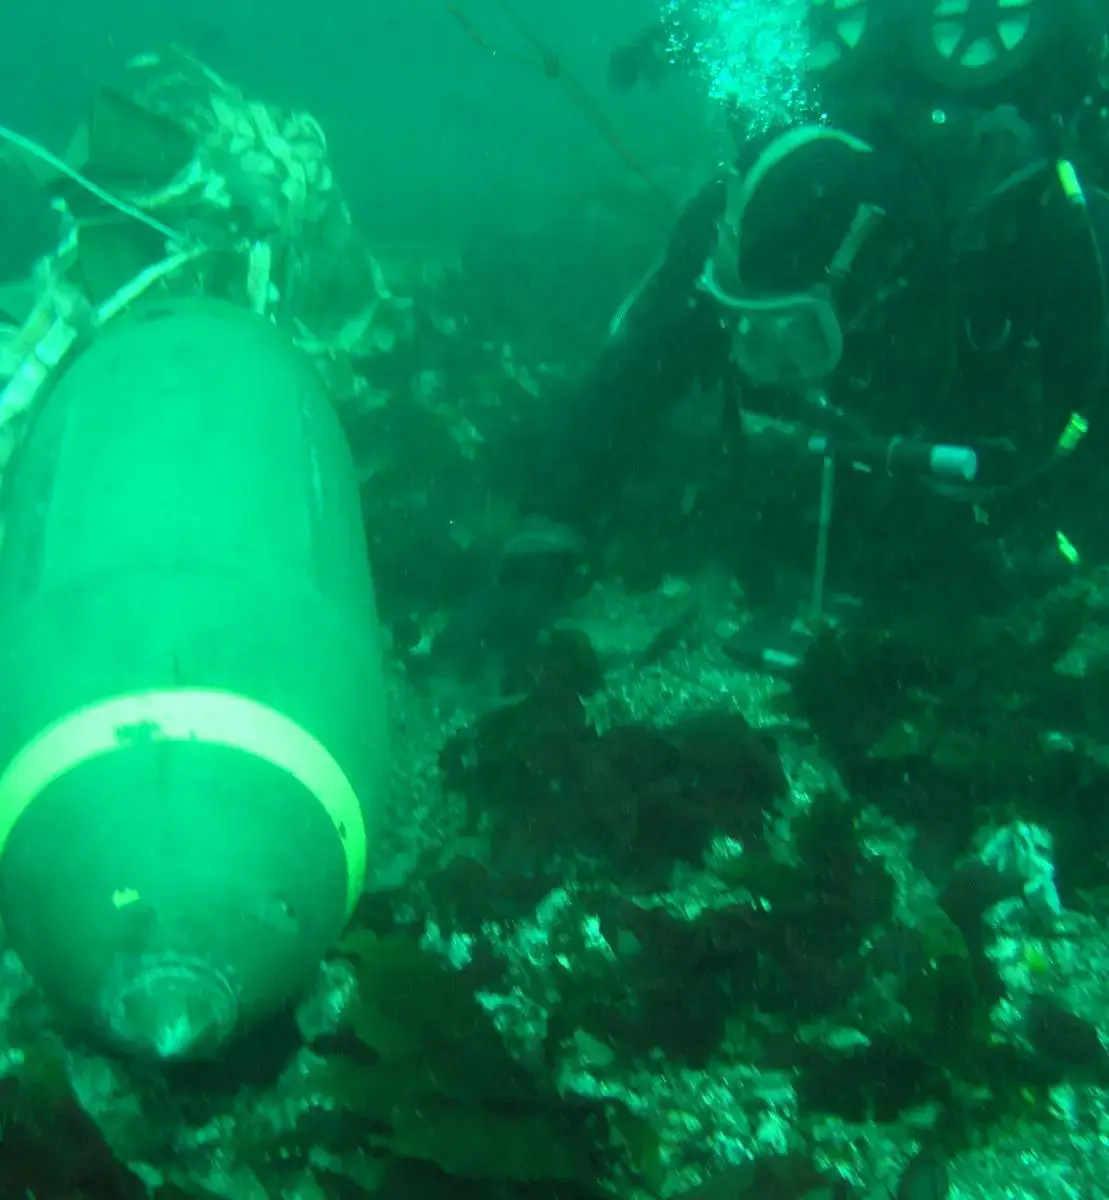 Brimstone navy diver surveying uxo